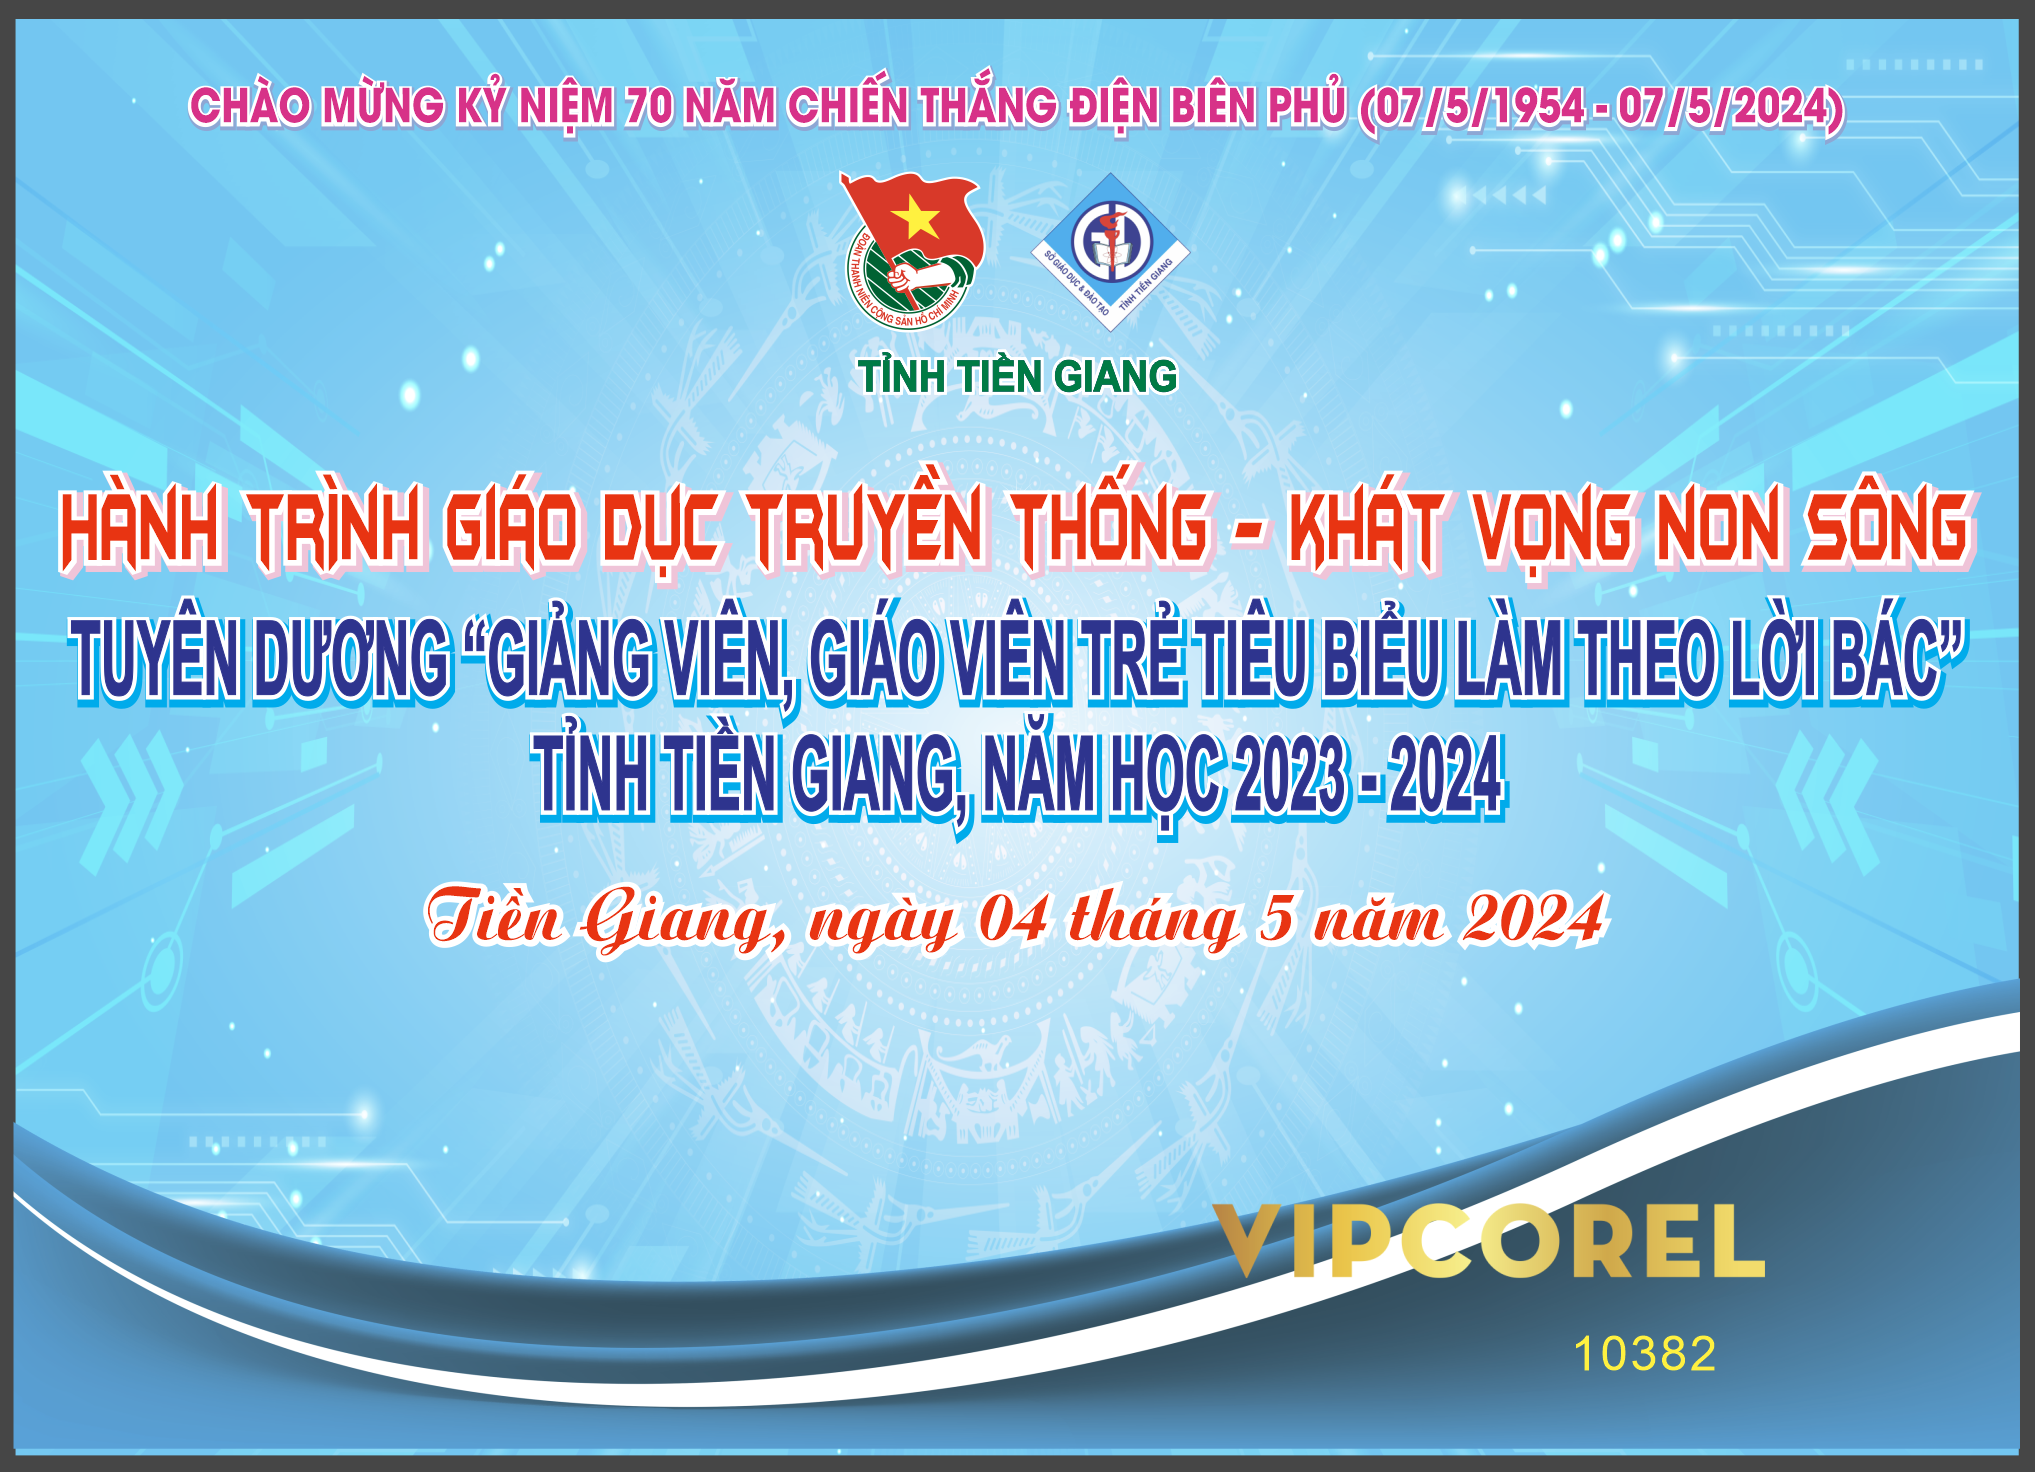 market hanh trinh giao duc truyen thong - khat vong non song.png